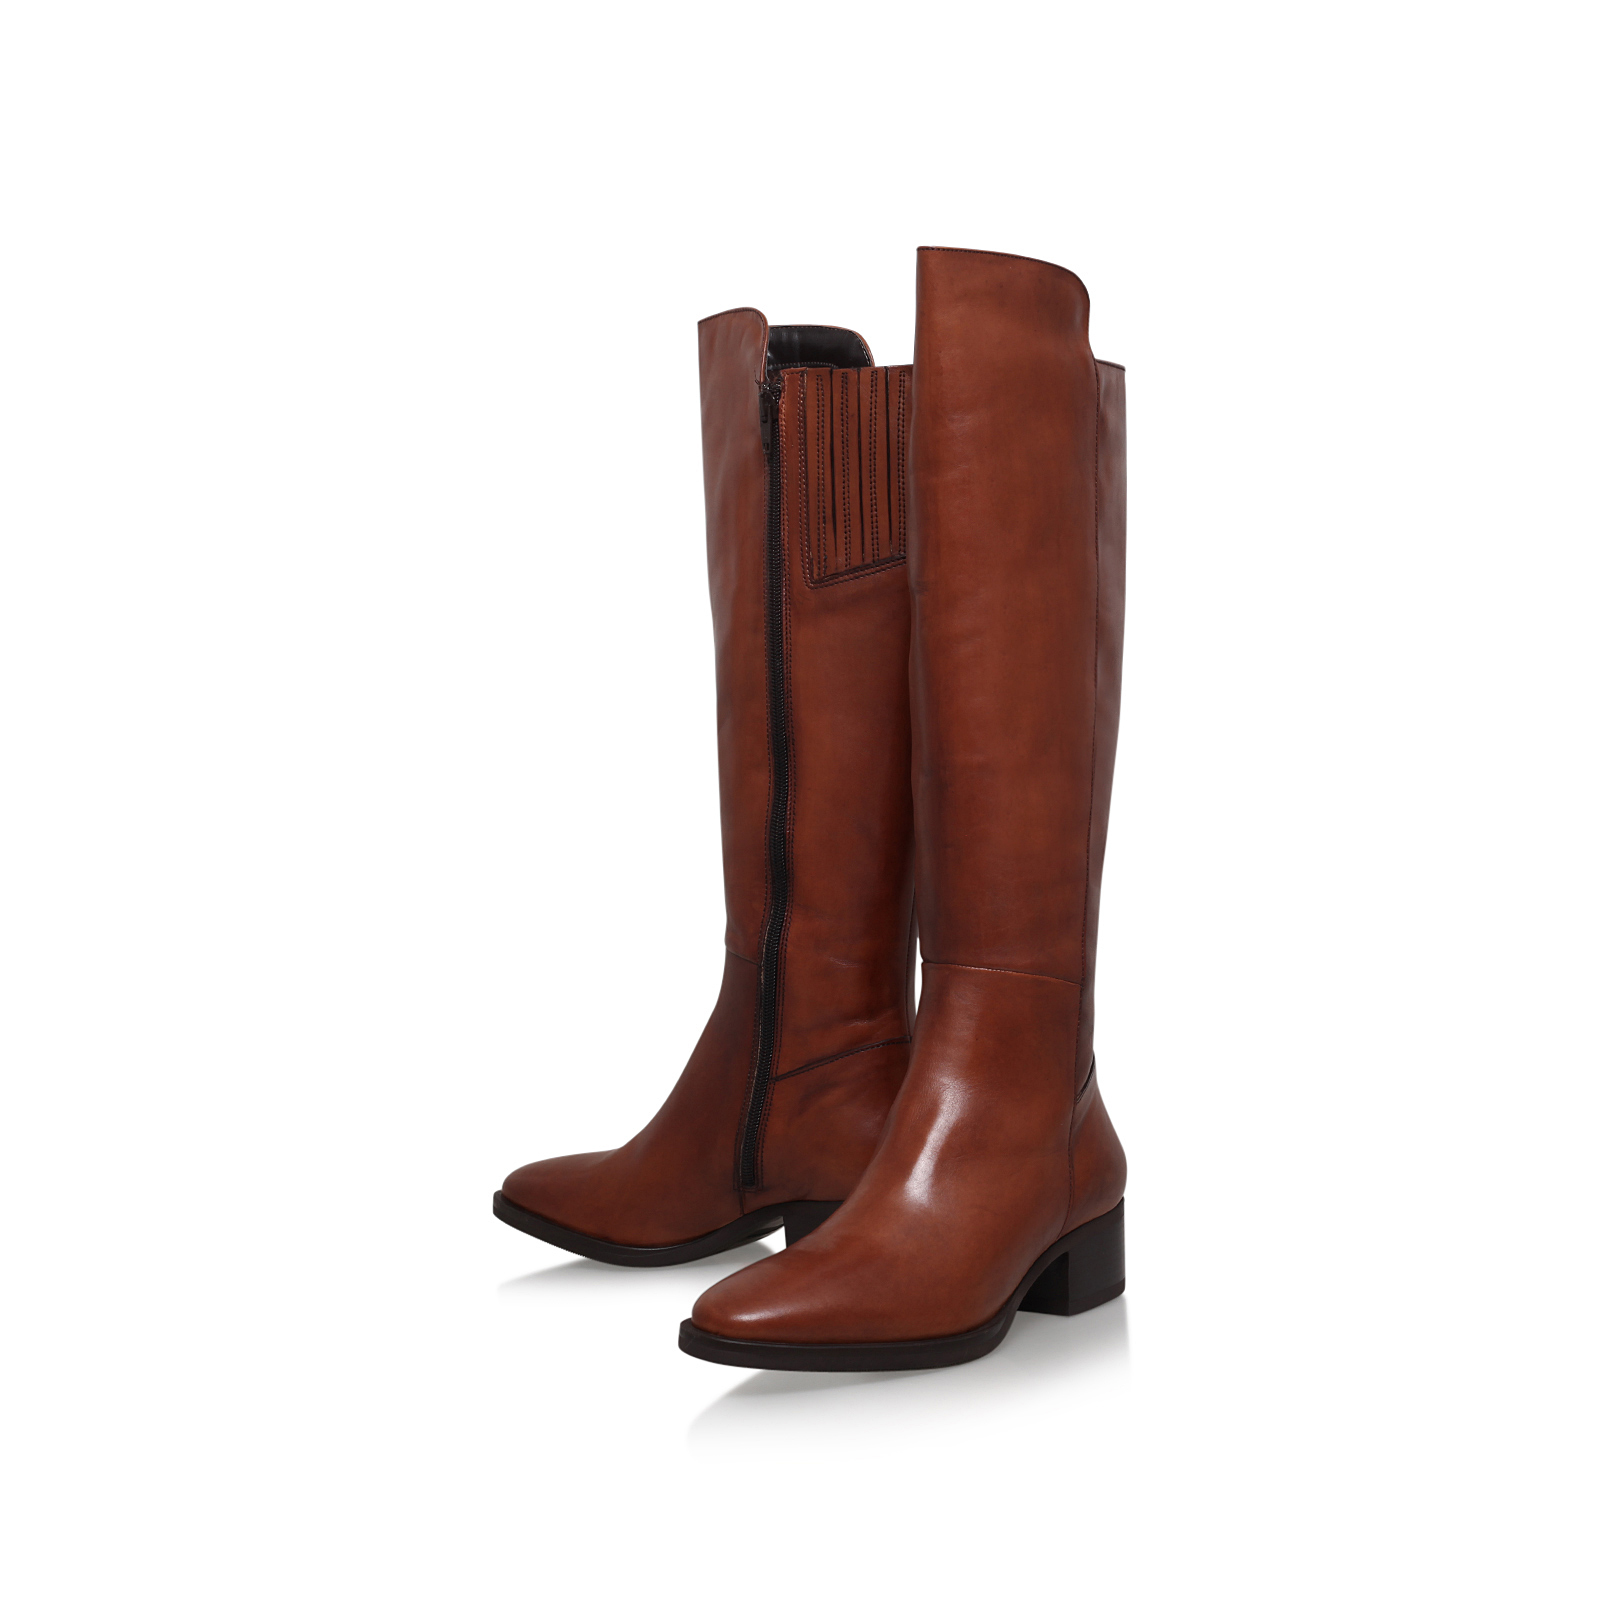 WINDY Carvela Windy Tan Leather Flat High Leg Boots by CARVELA KURT GEIGER